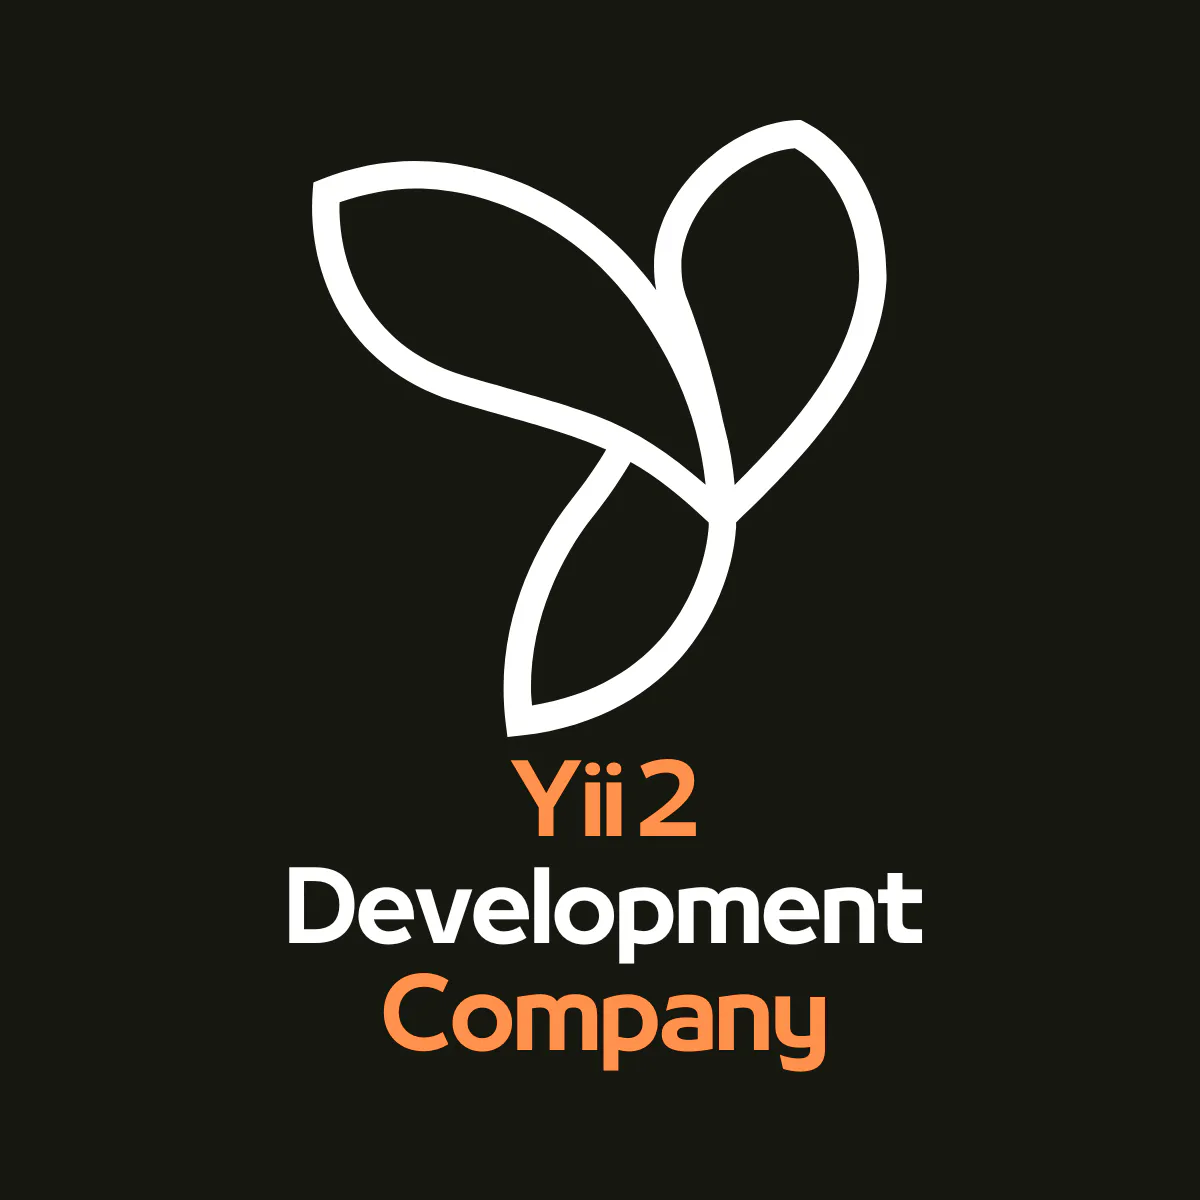 Yii 2 Development